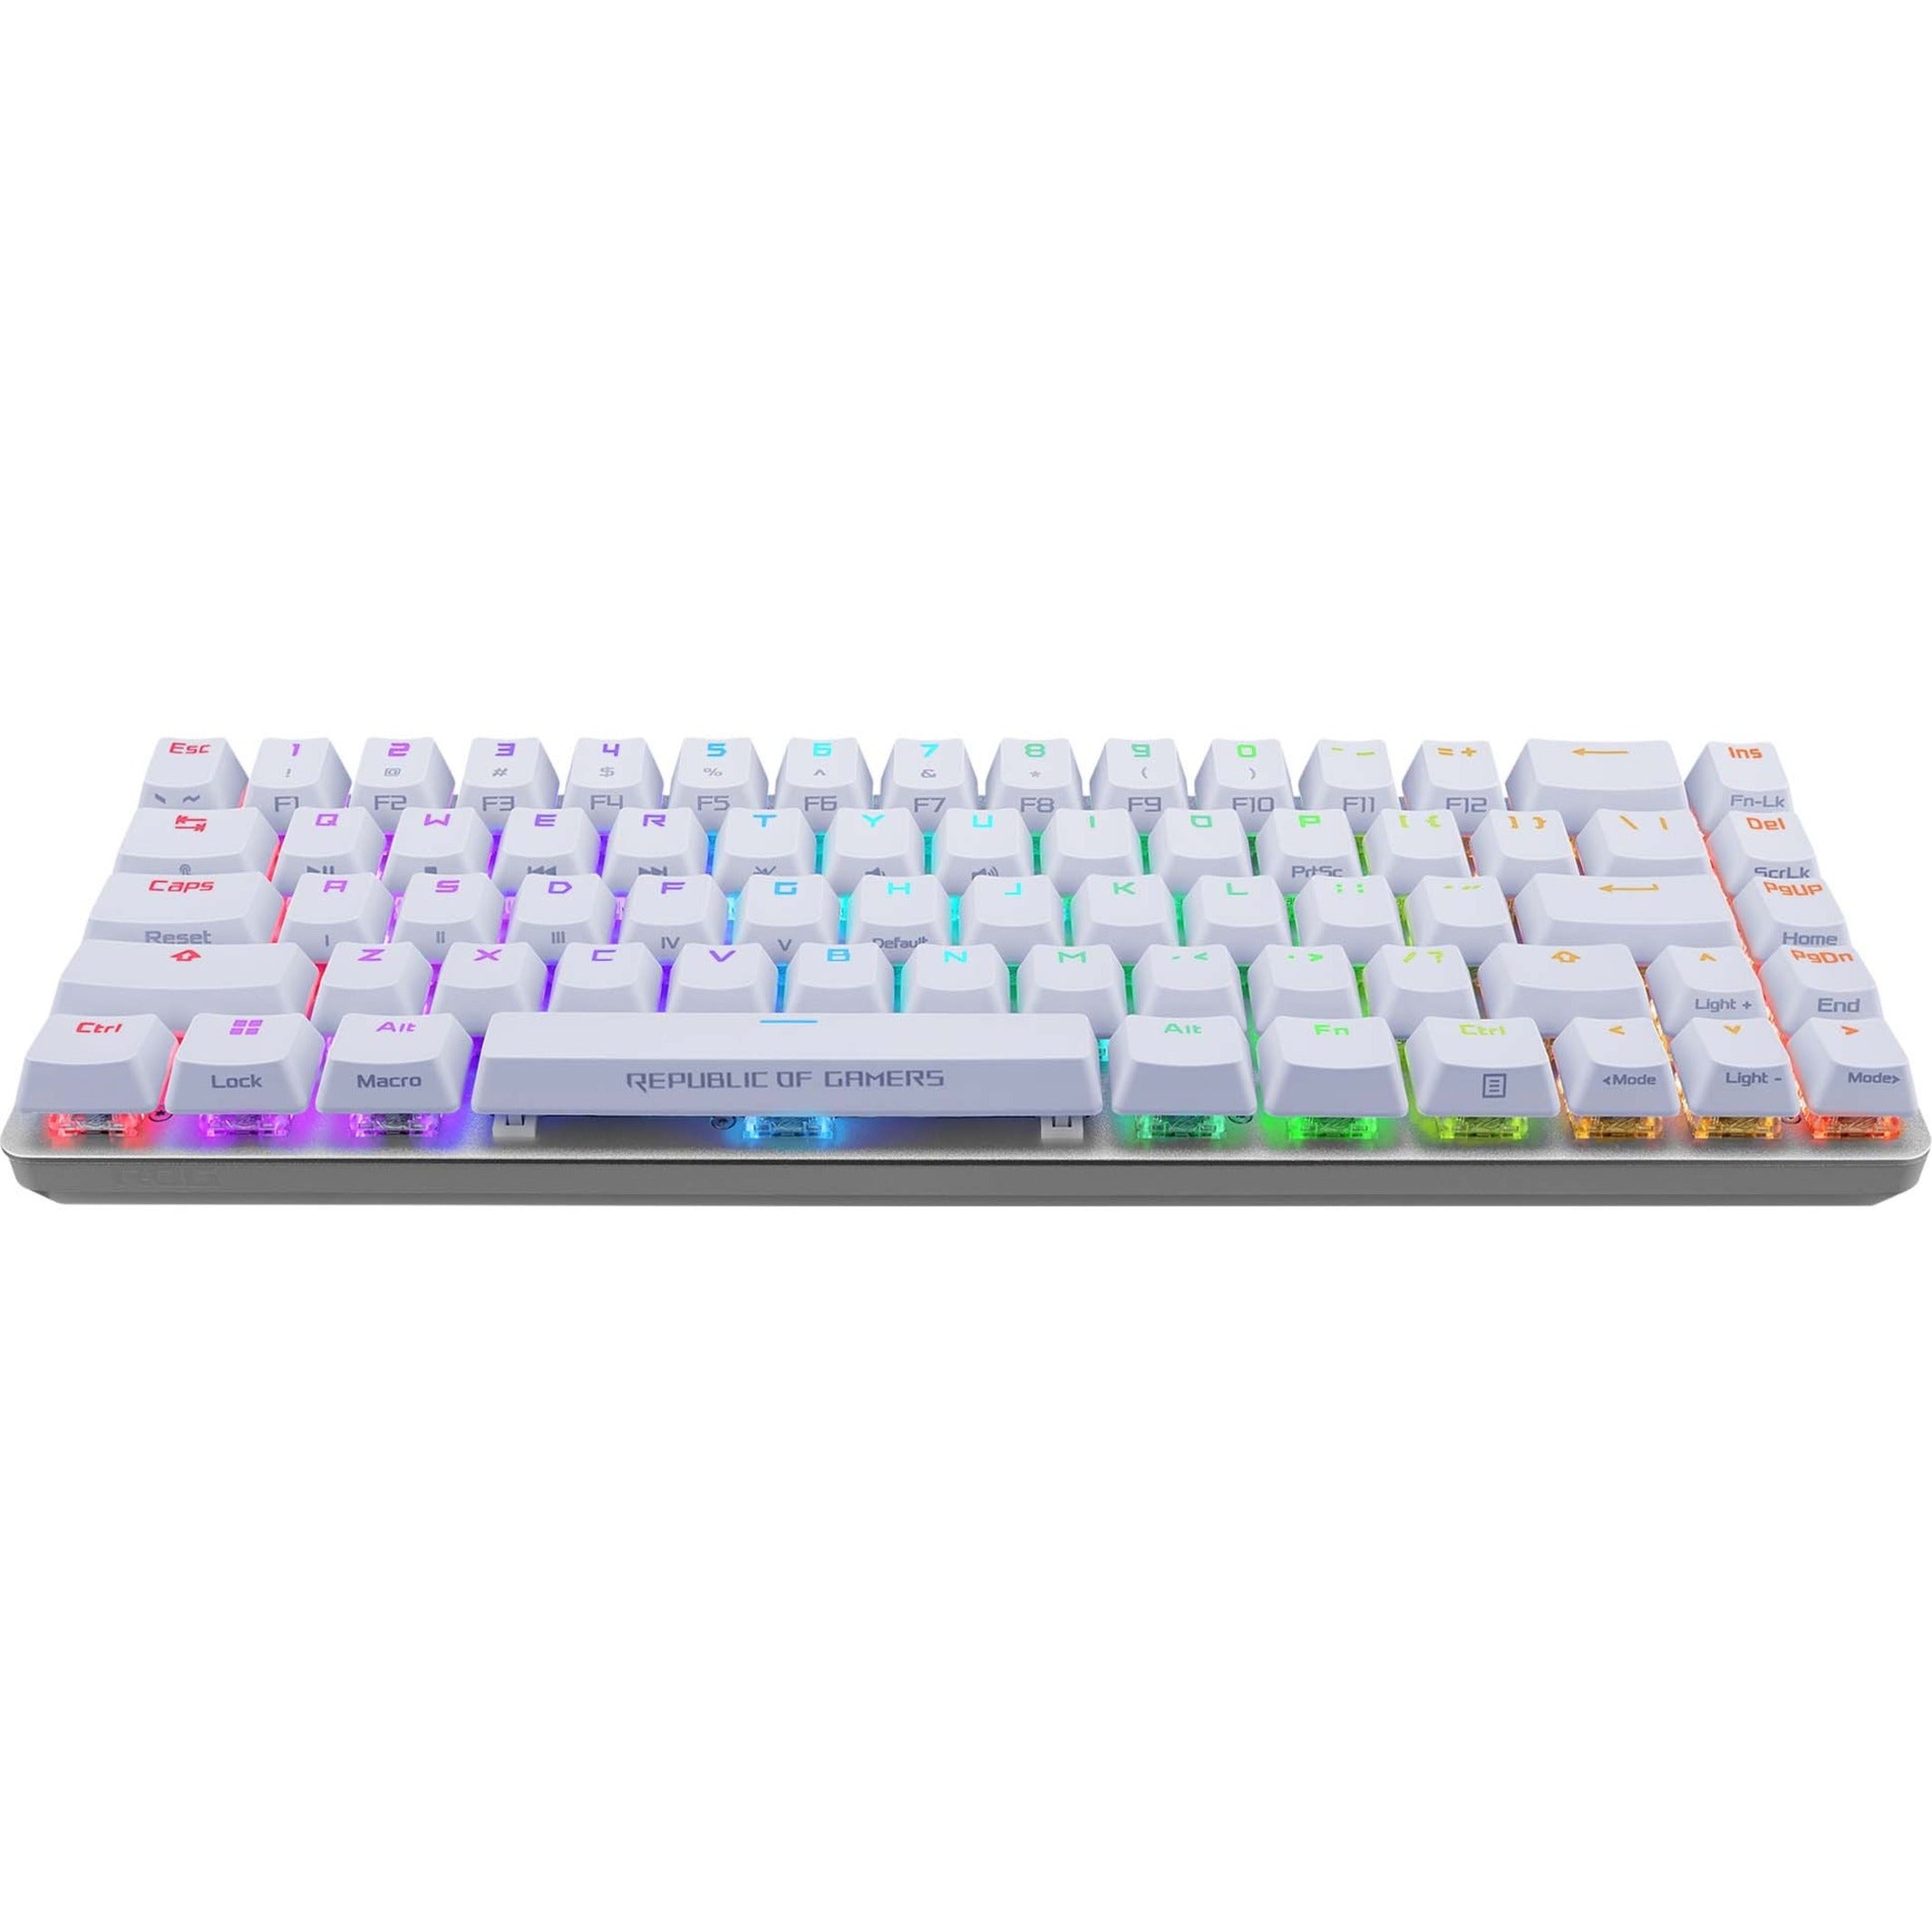 Asus ROG M602FALCHIONACE/NXBN/WHT Falchion Ace Gaming Keyboard, RGB LED Backlight, Mechanical Keyswitch Technology, Compact and Ergonomic Design